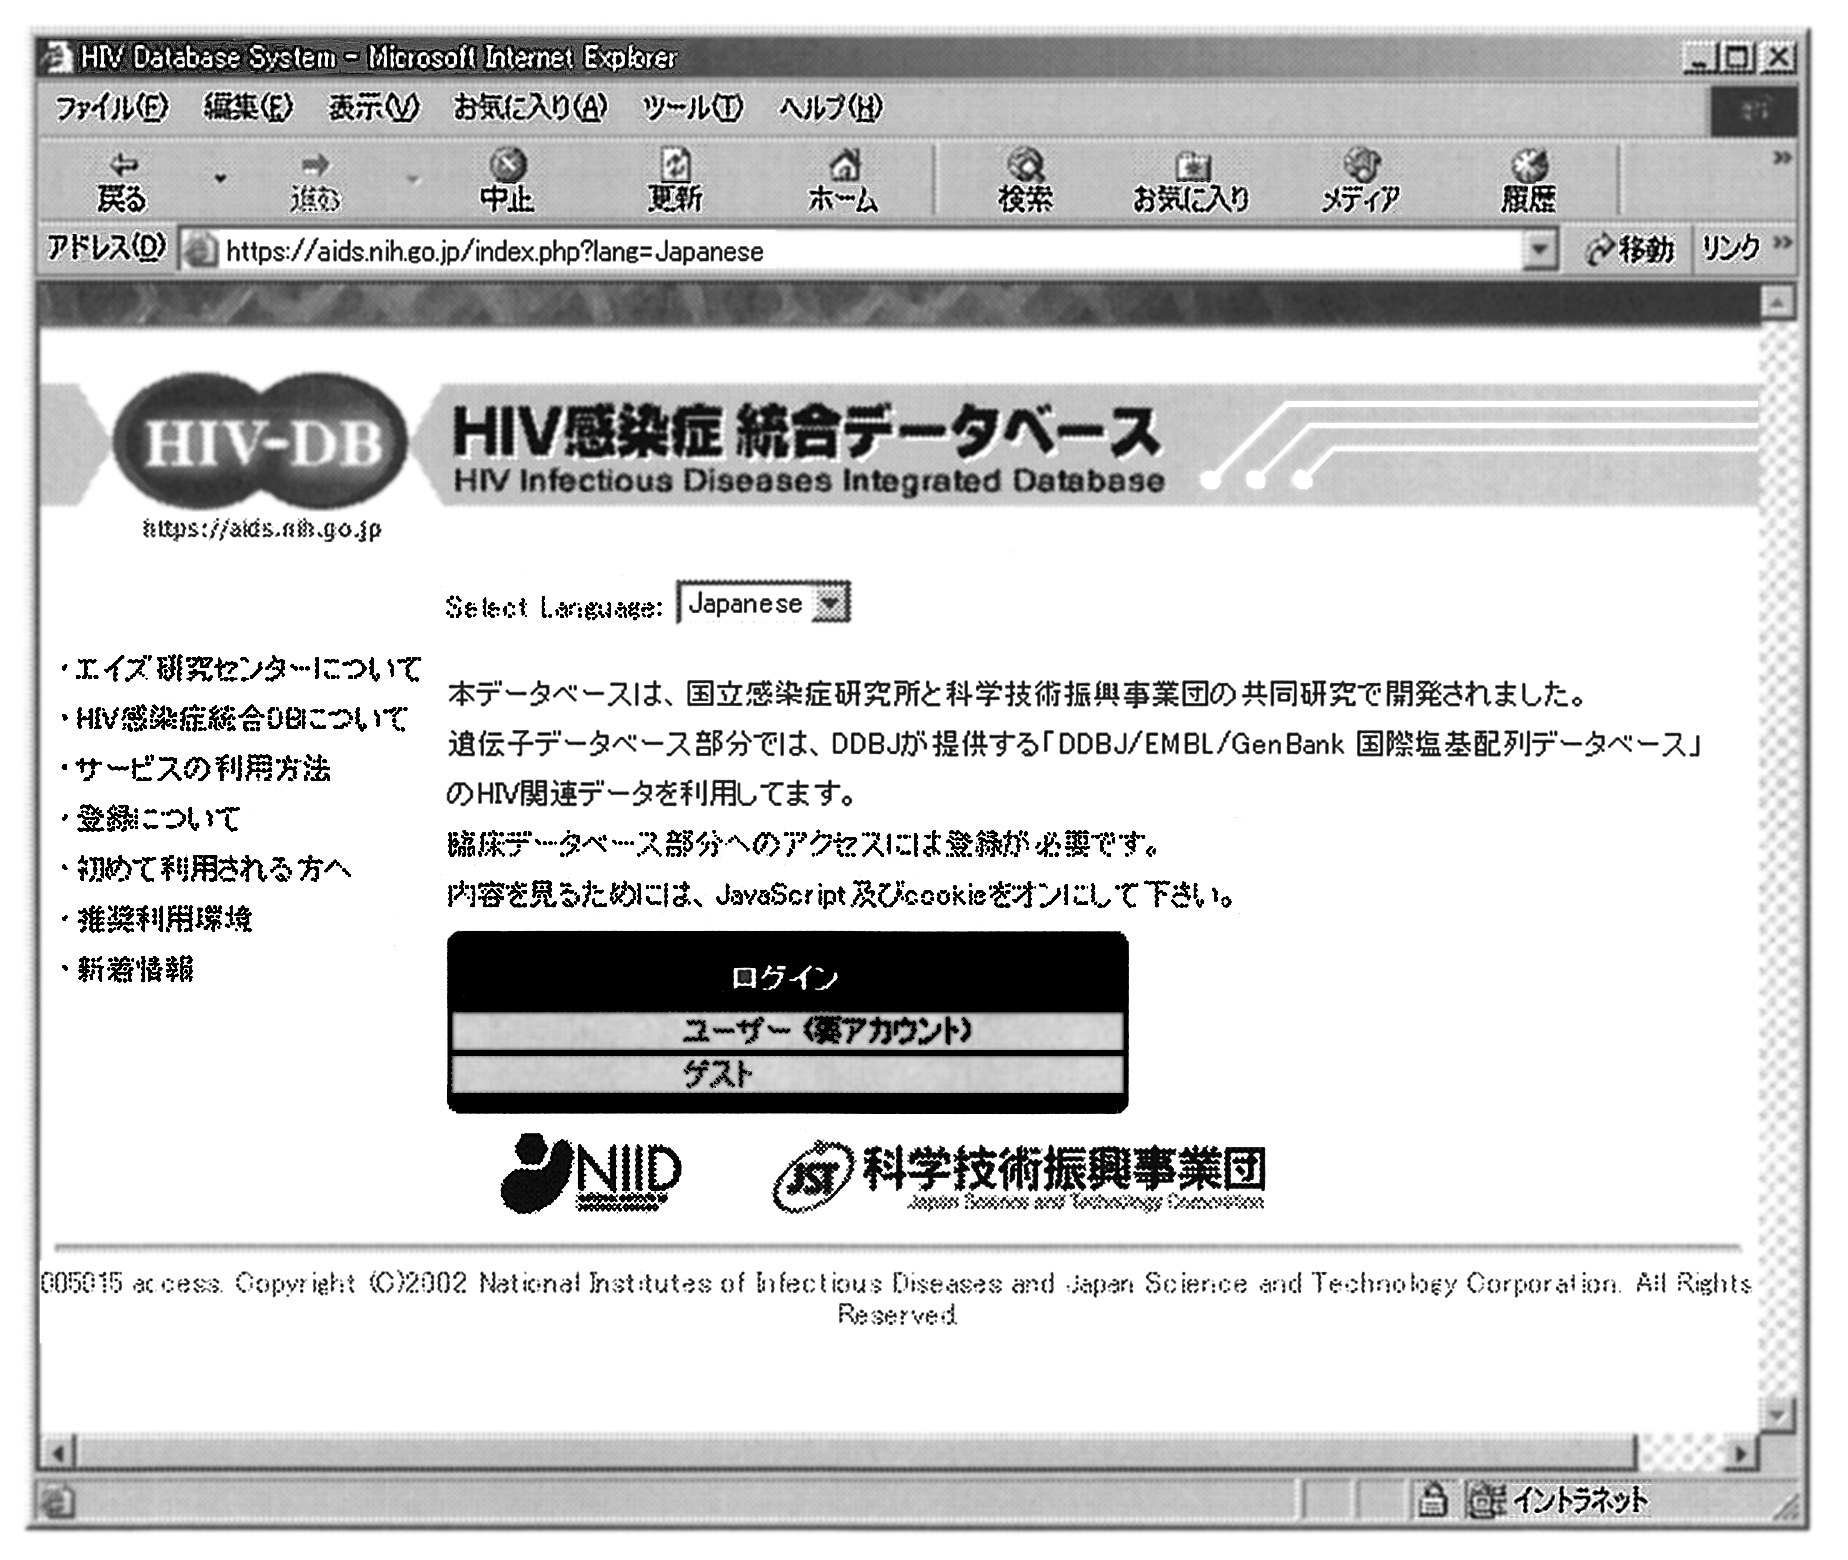 The Journal of AIDS Research Vol. 0 No. +,**. + HIV Y µ P : https : //aids.nih.go.jp U ¹ *º=» 12 ¼KHJ : DDBJ DNA Data Bank of Japan HIV HIV!